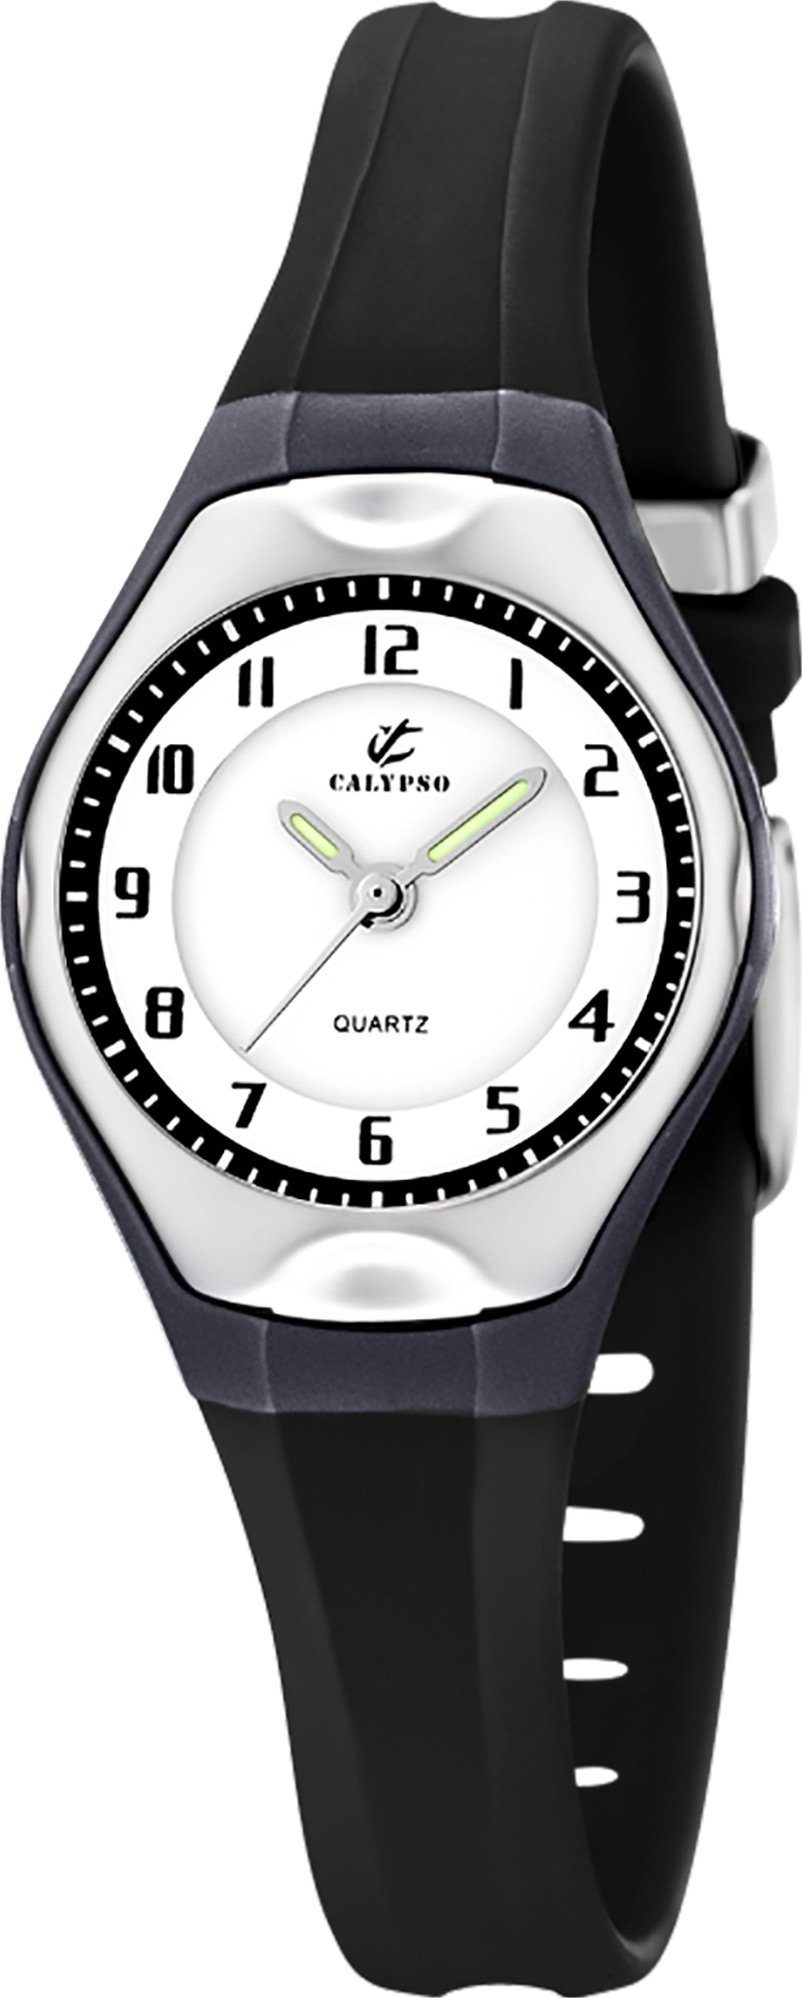 CALYPSO WATCHES Quarzuhr Calypso Kinder Uhr K5163/J Kunststoffband, Kinder Armbanduhr rund, Kautschukarmband schwarz, Casual